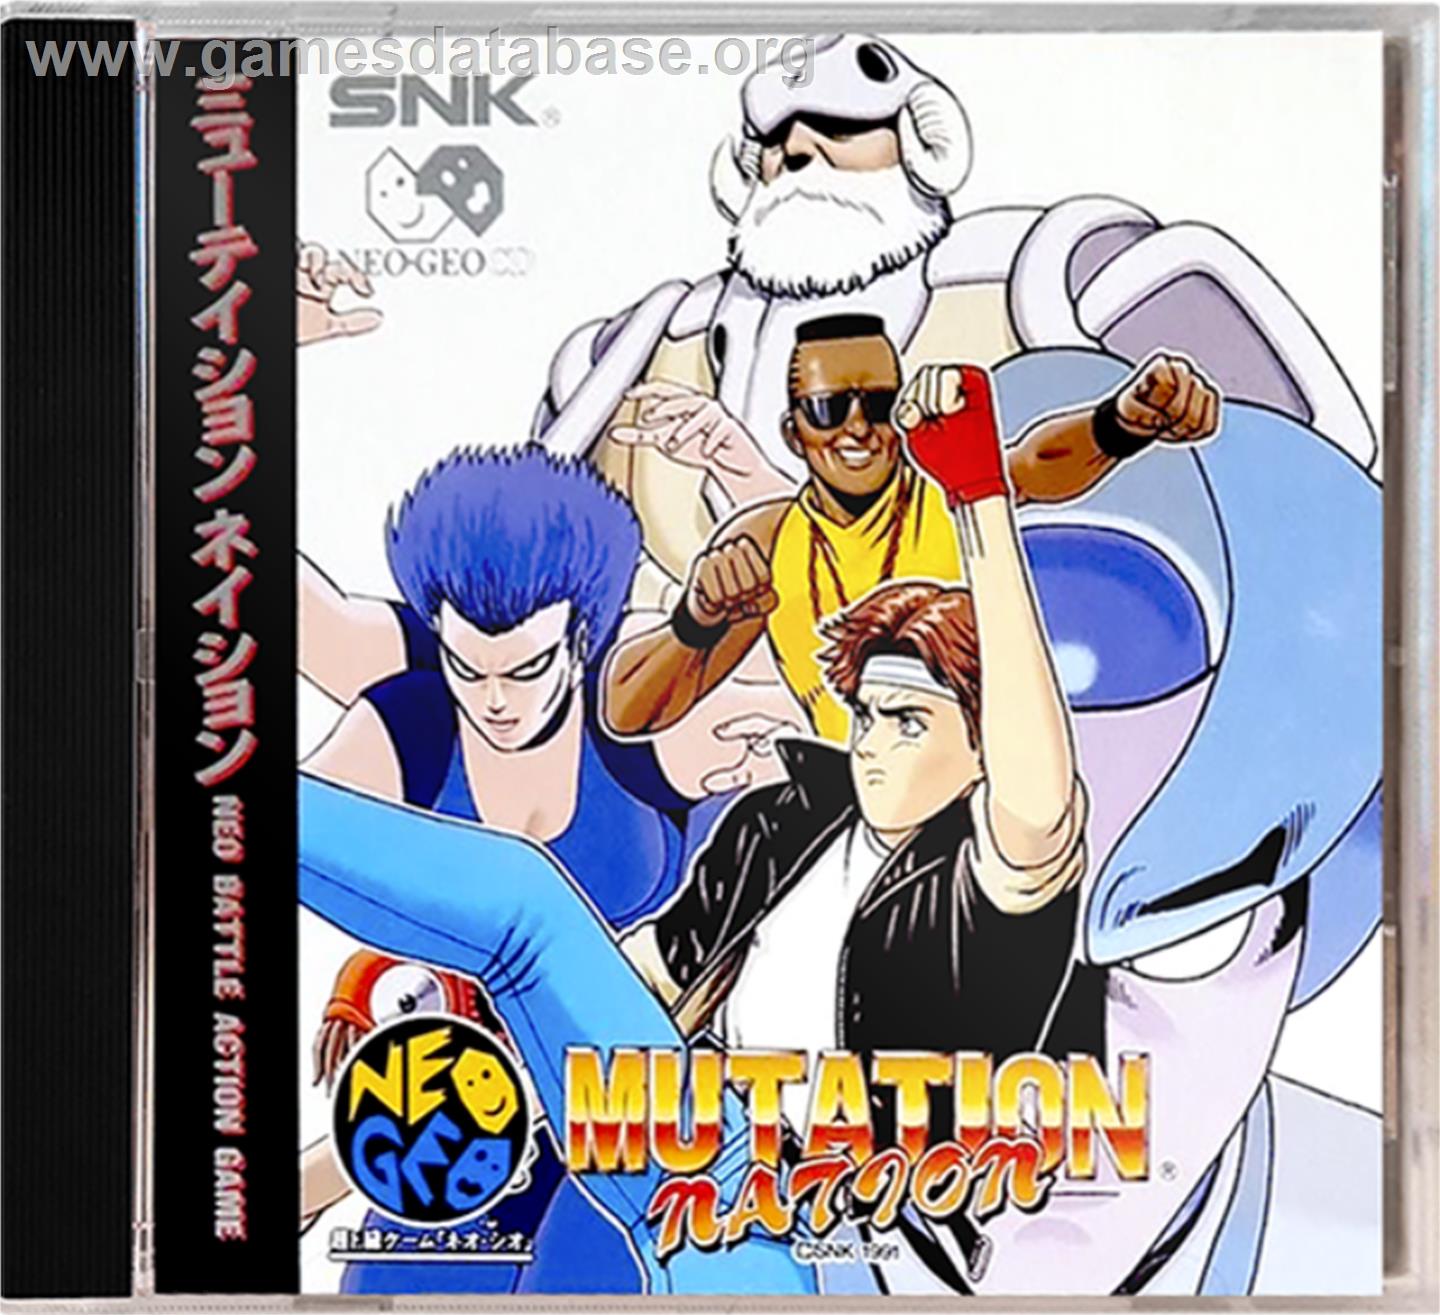 Mutation Nation - SNK Neo-Geo CD - Artwork - Box